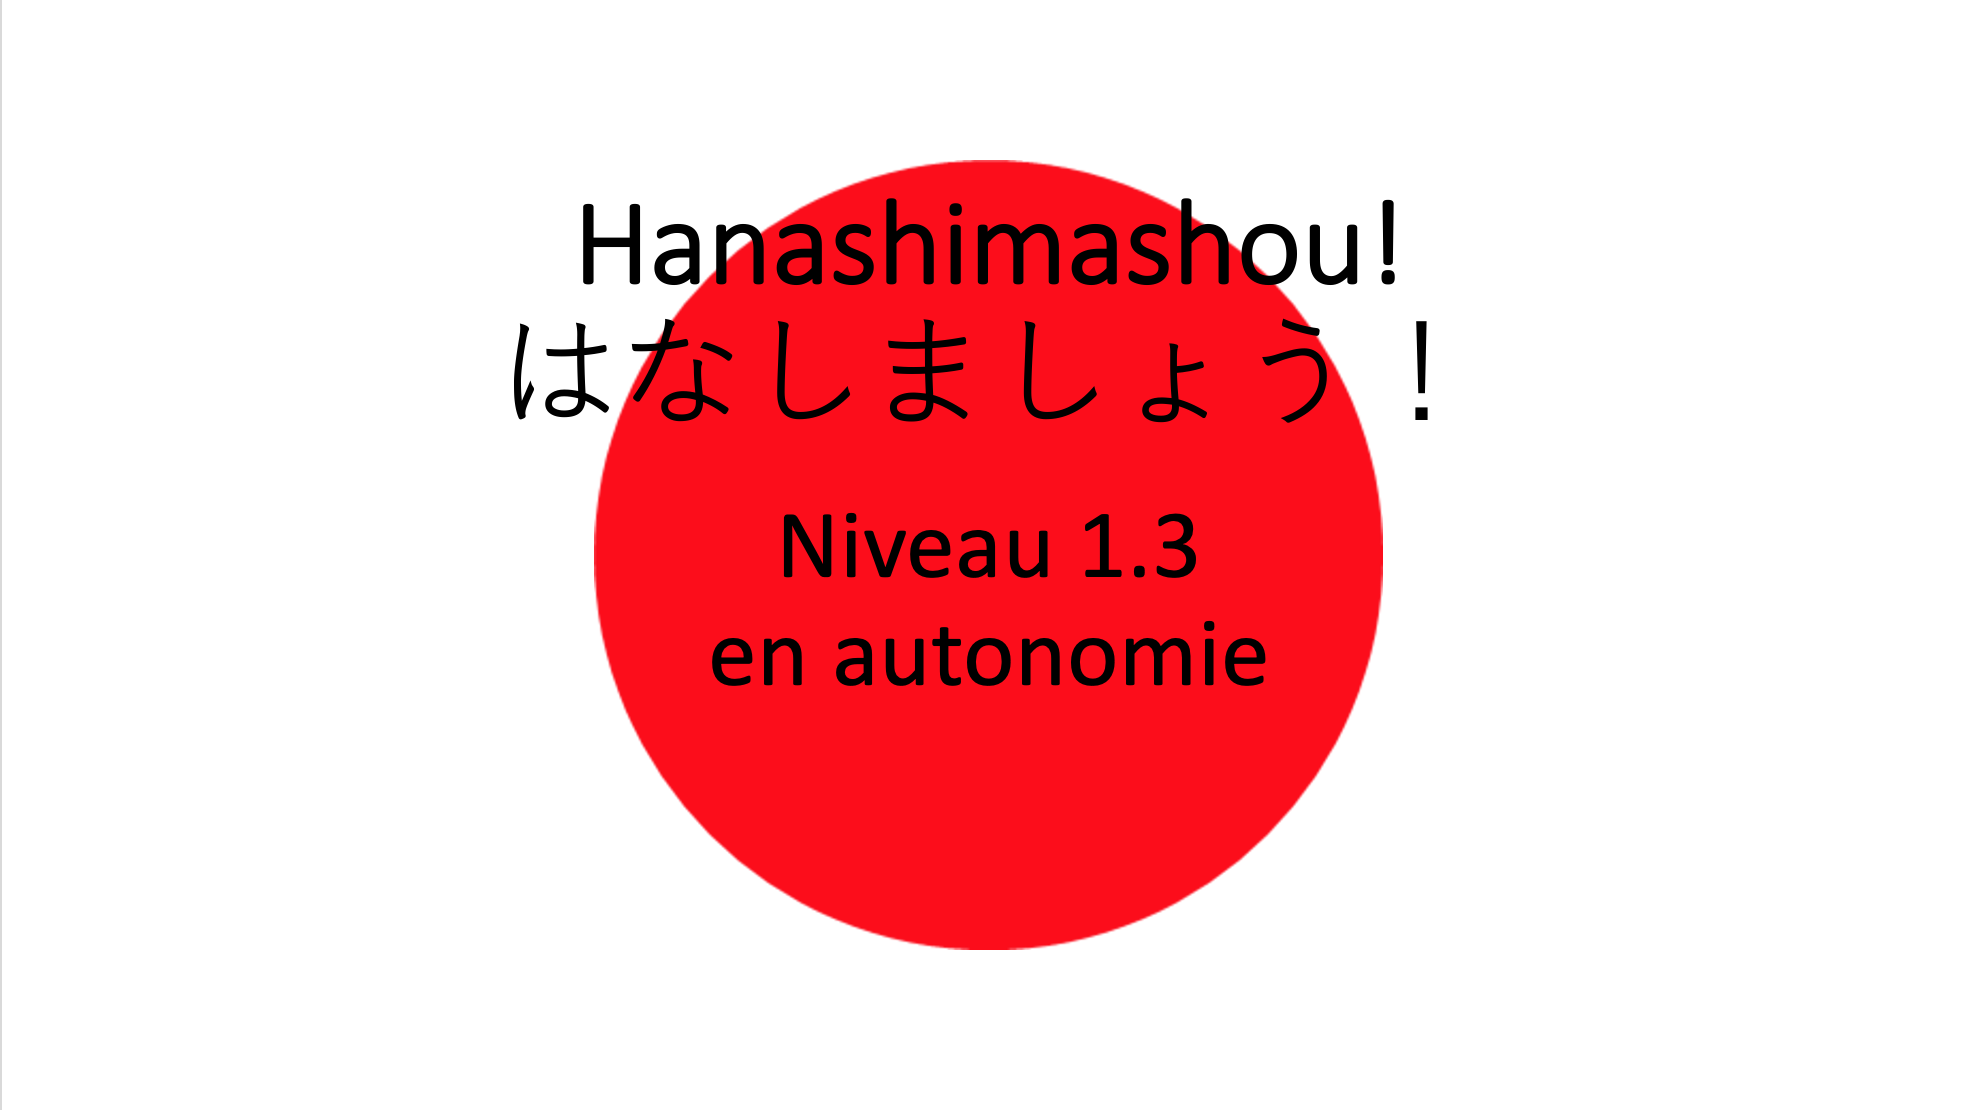 Hanashimashou Niveau 1.3 en autonomie